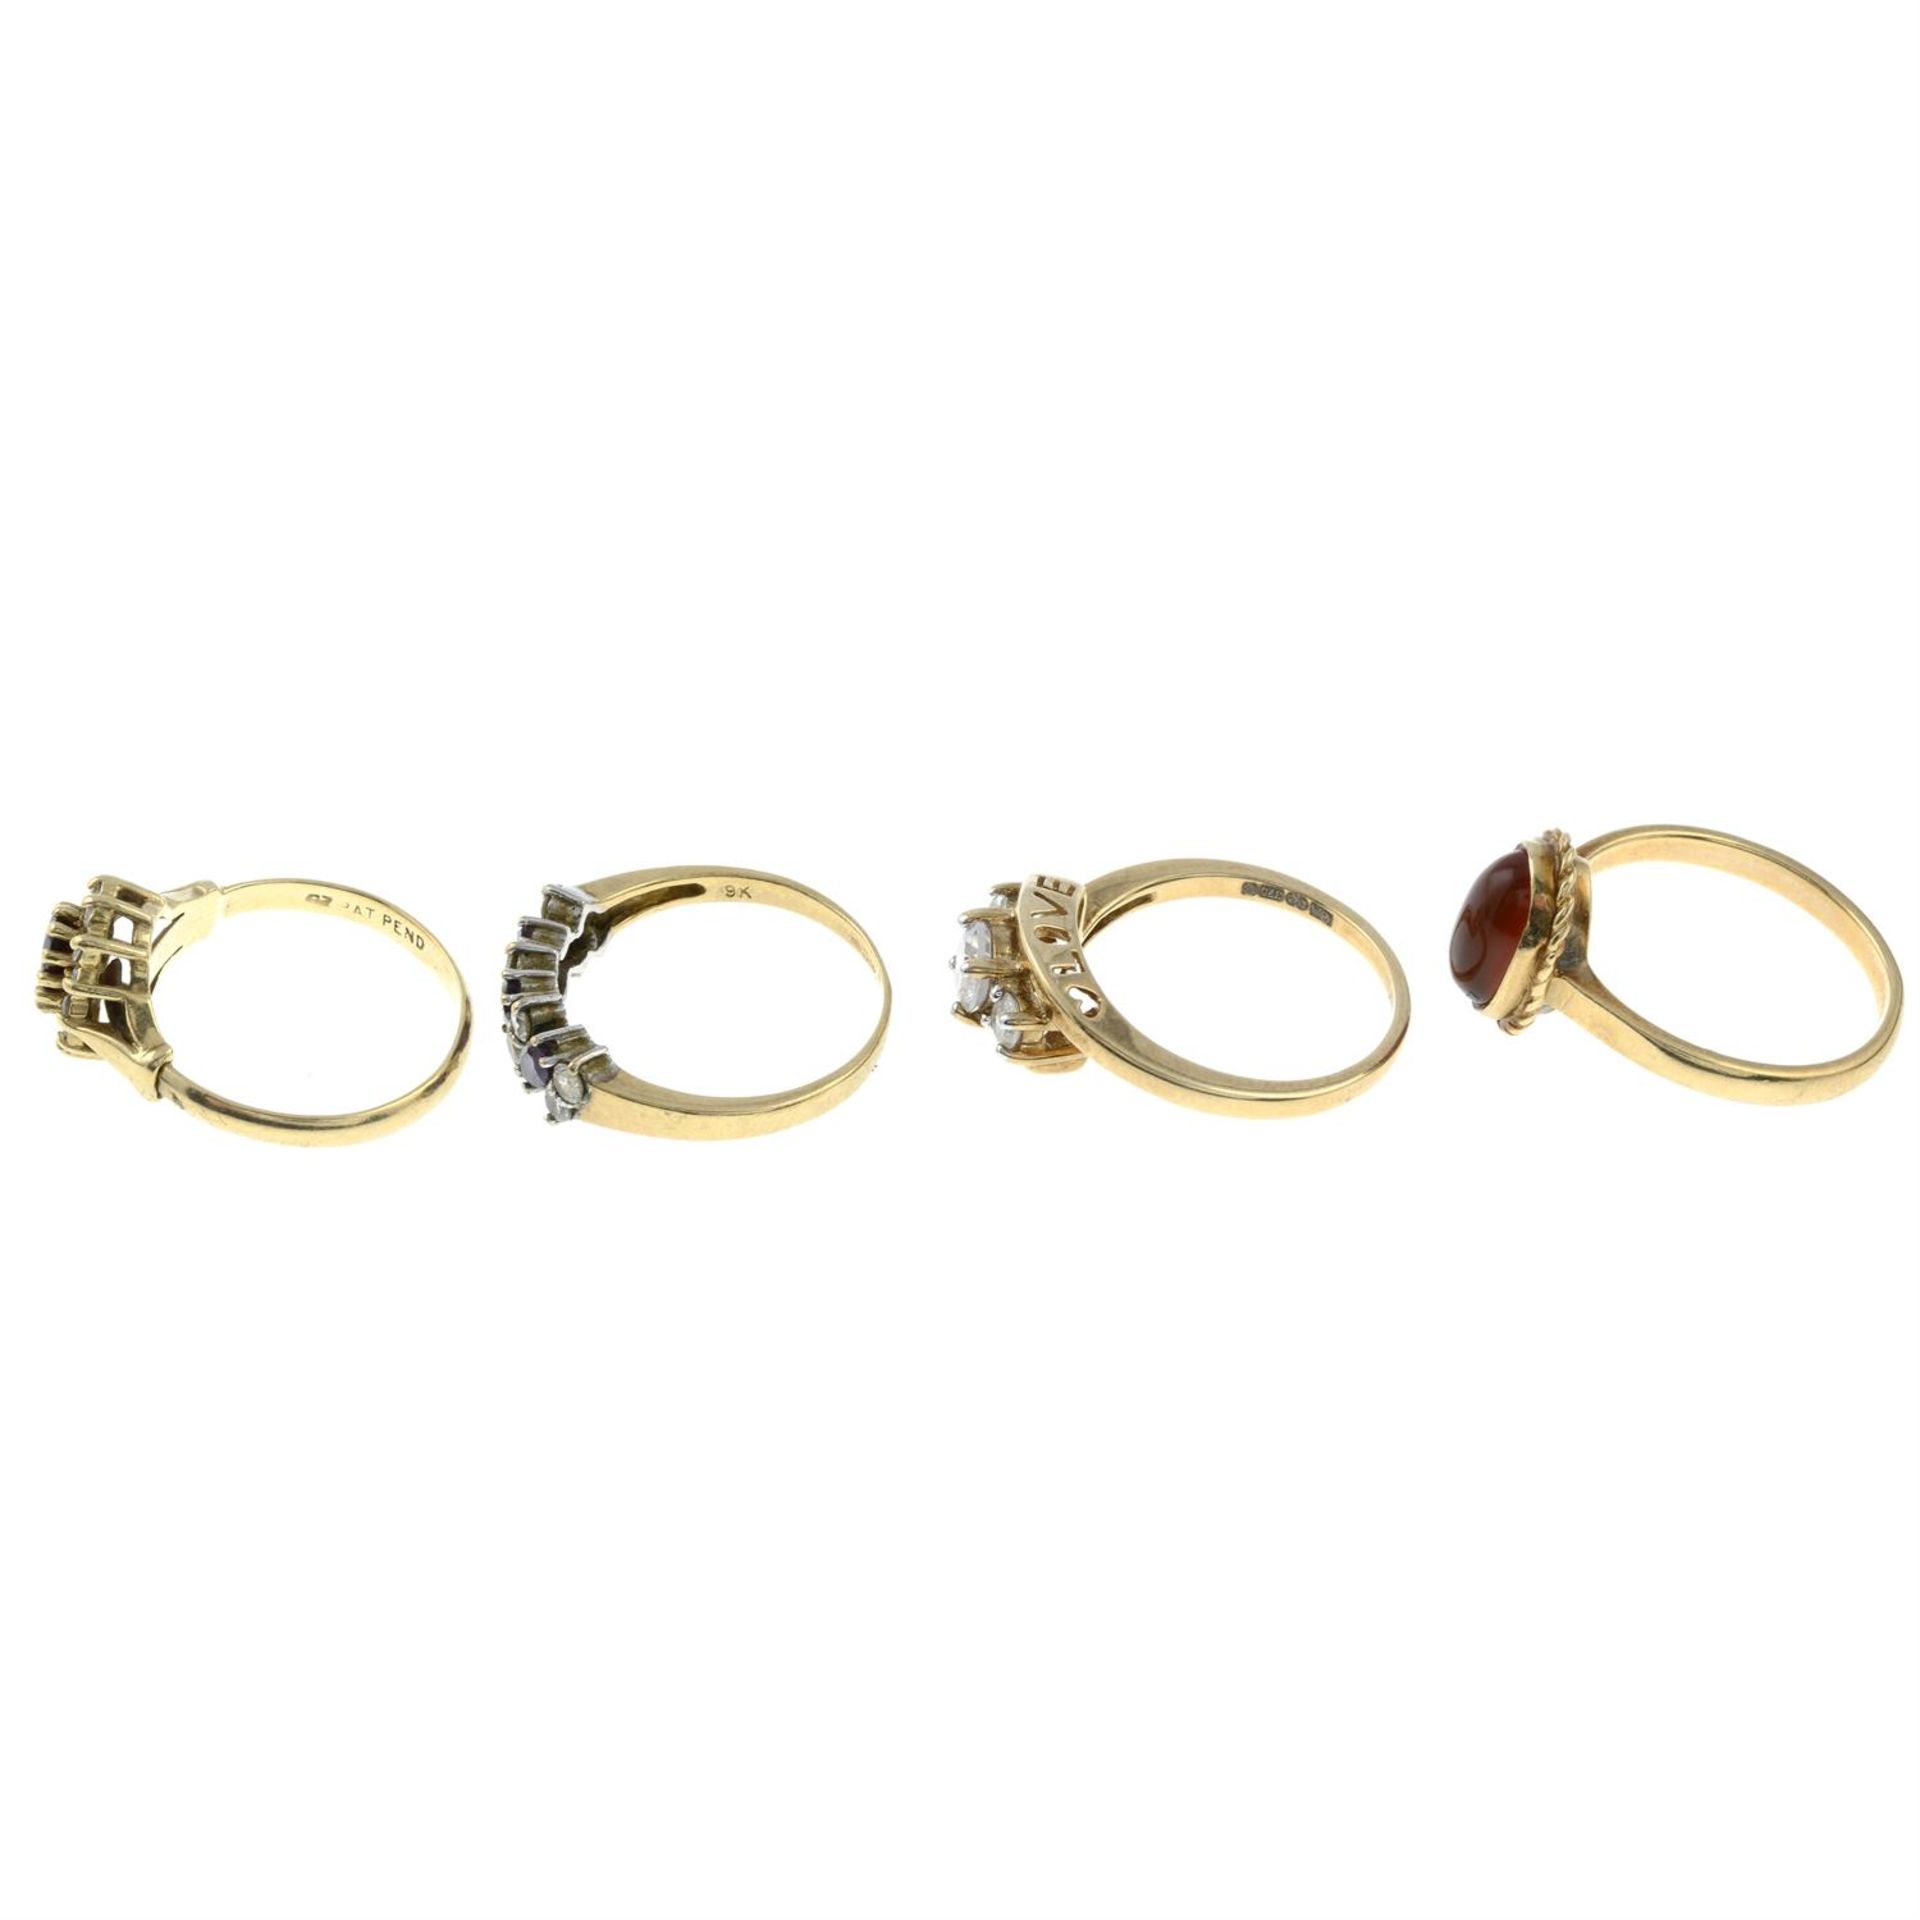 Four 9ct gold gem-set rings. - Image 2 of 3